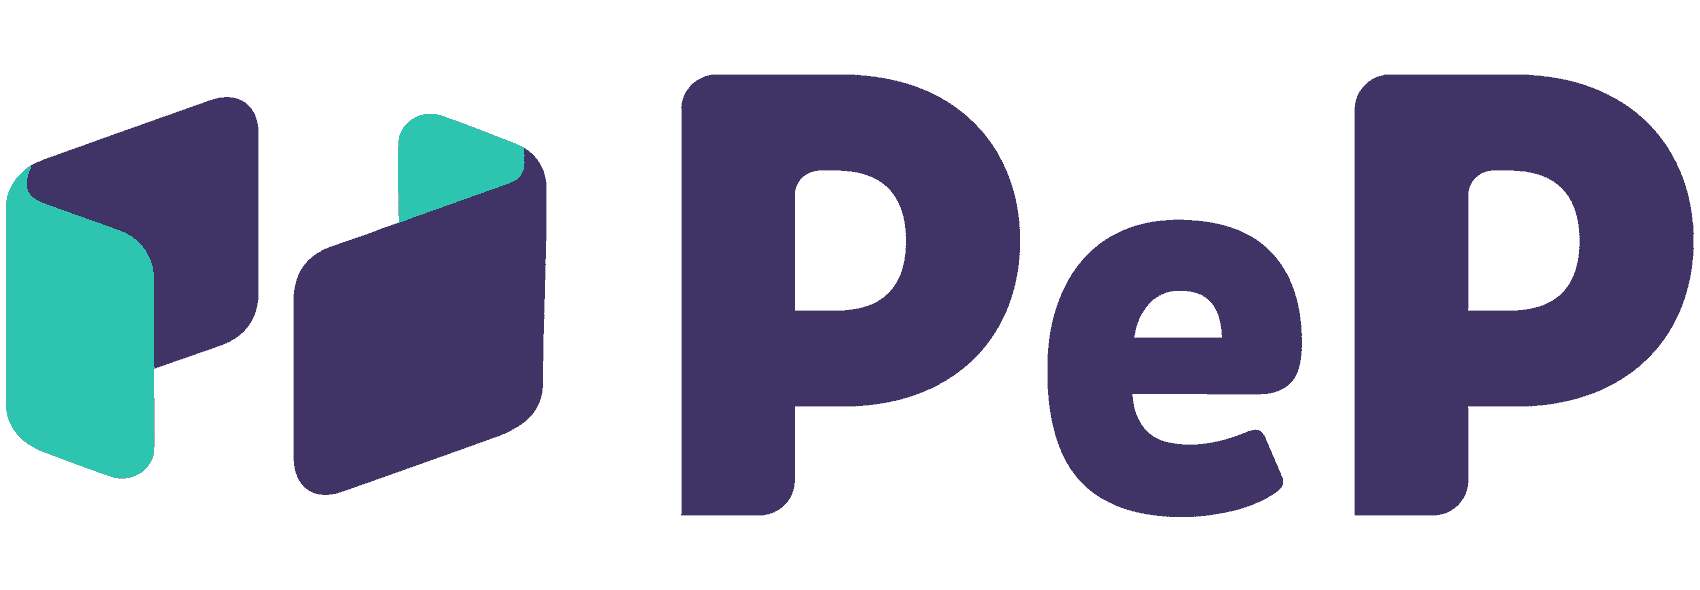 Pep 1 лого. Pep проекты. Lel Pep логотип. Bolelin логотип. Пеп перевод